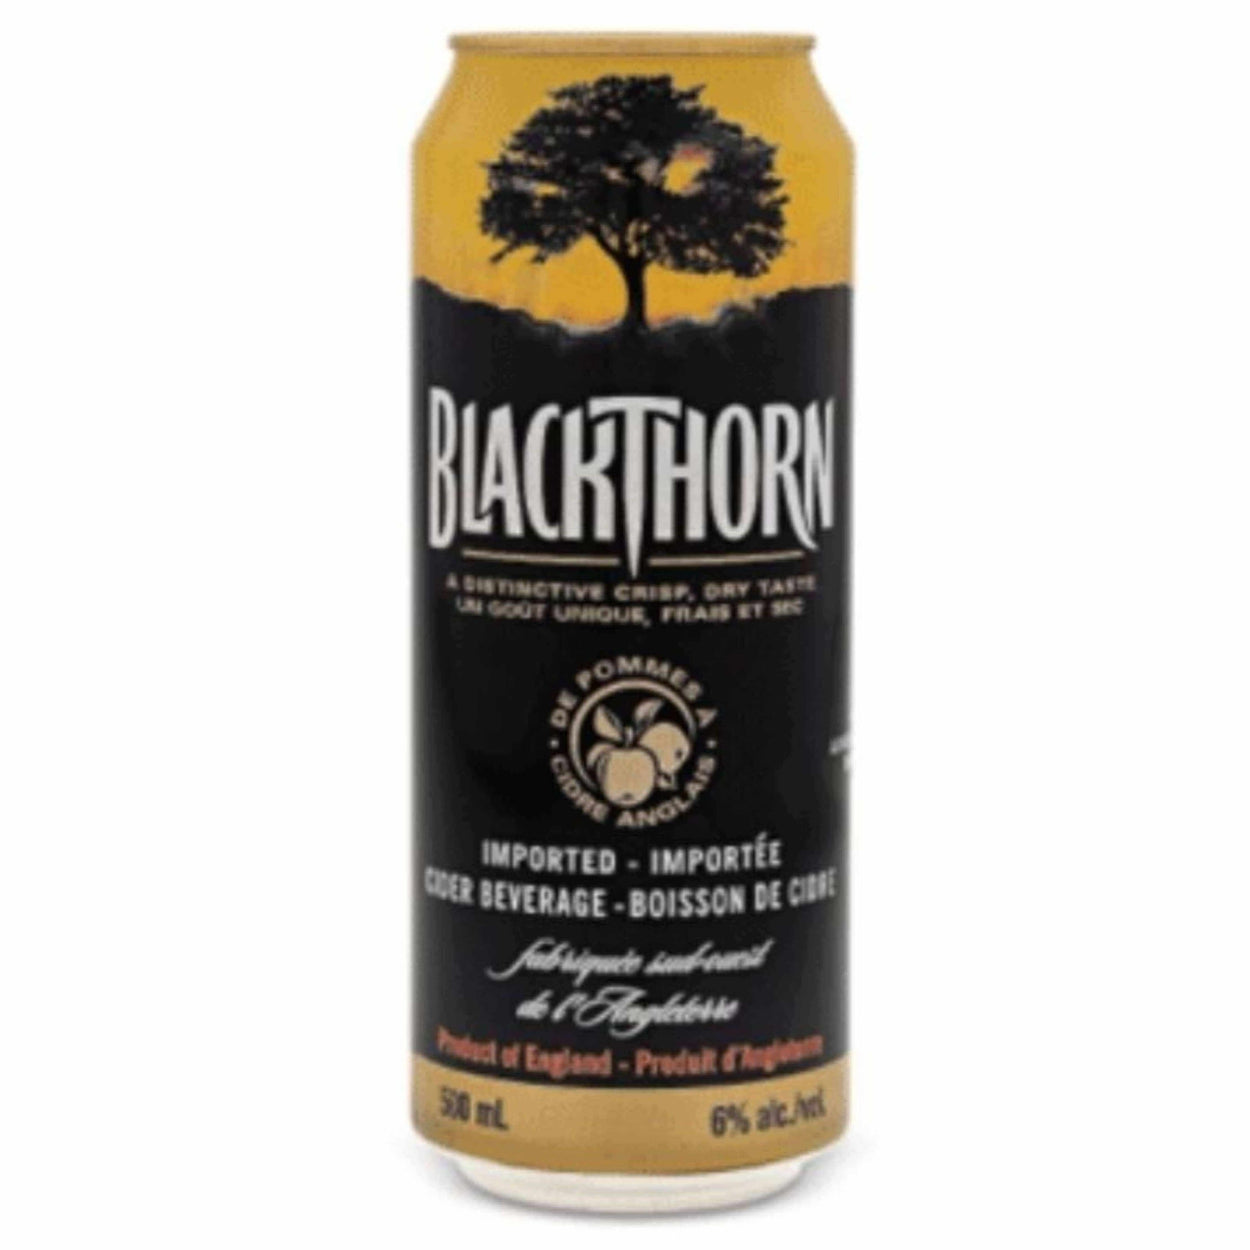 Buy Blackthorn Cider 500ml Online - Flaskfinewines.com